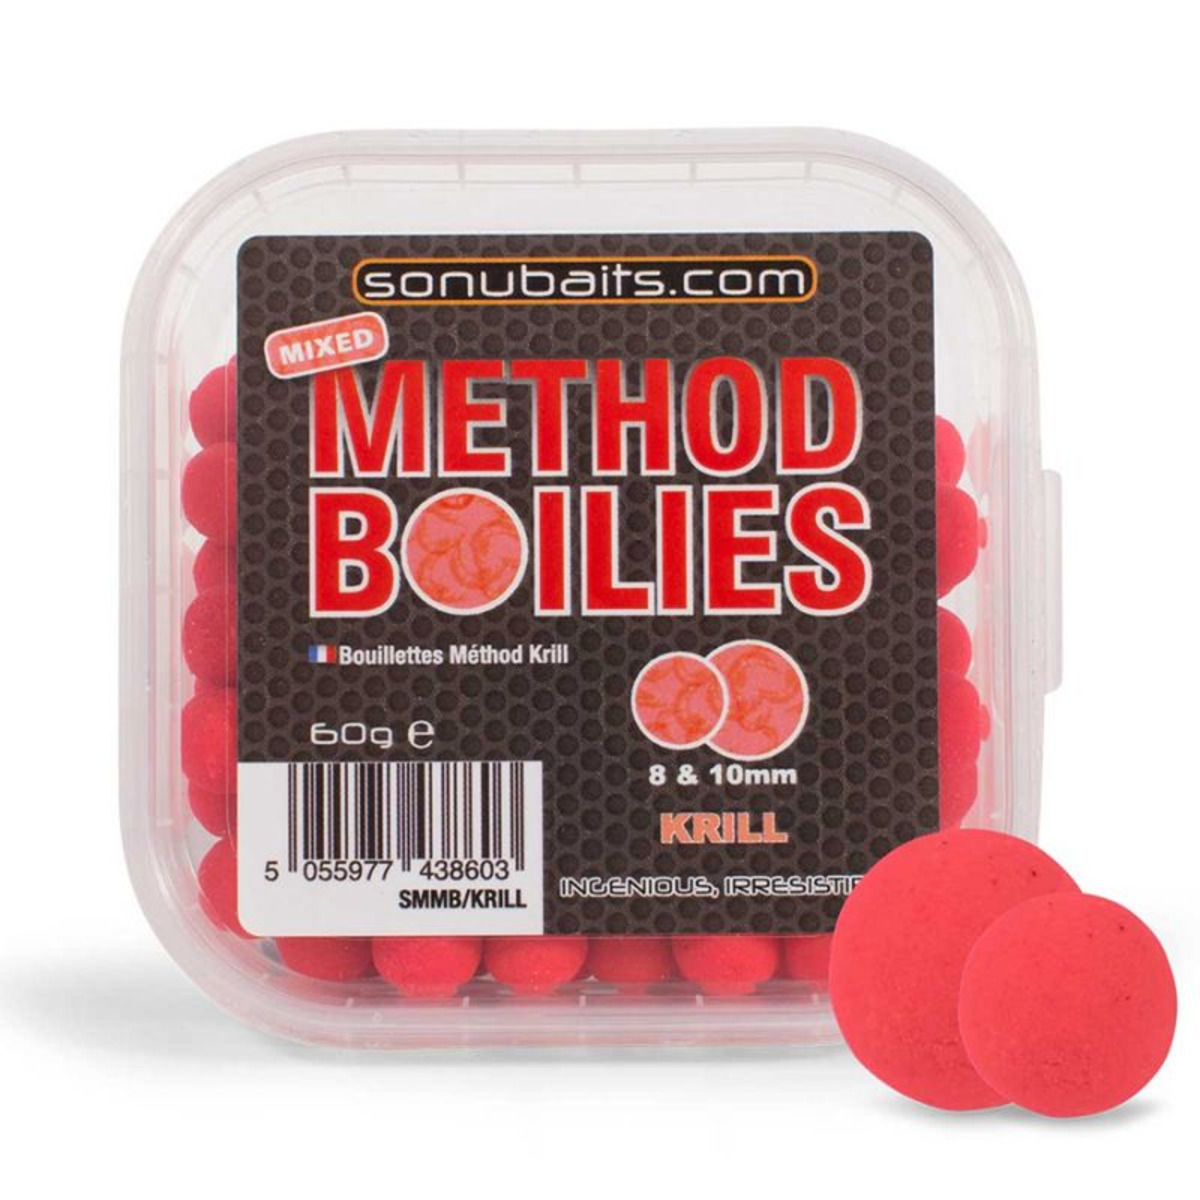 Sonubaits Mixed Method Boilies - 8-10 mm - 60 g - Krill